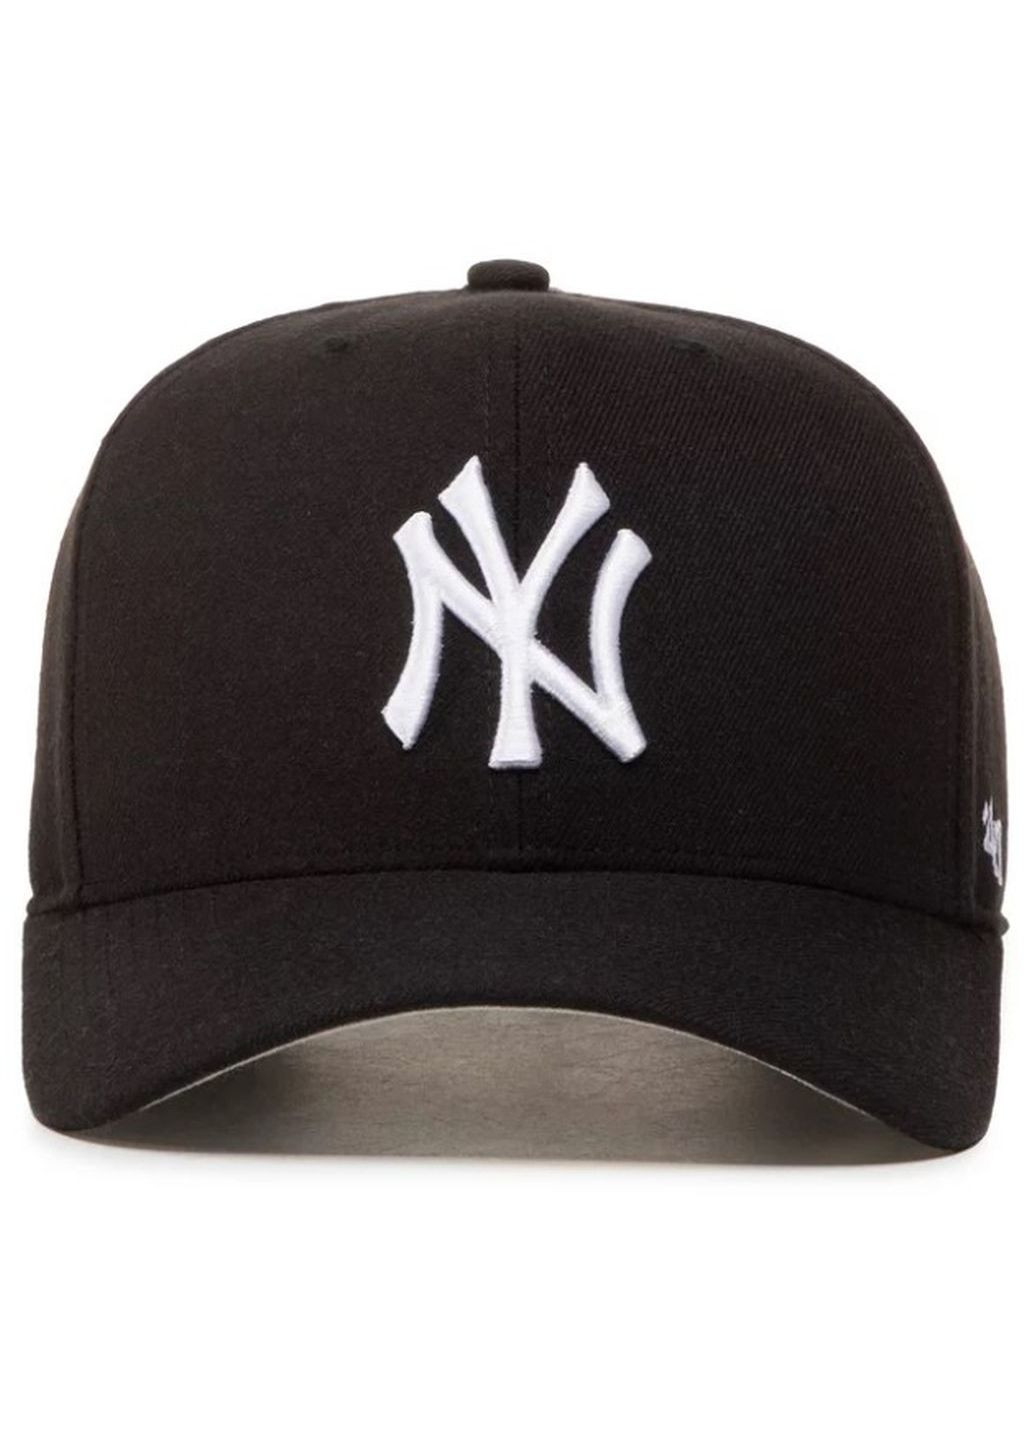 Бейсболка New York Yankees Cold Zone '47 B-CLZOE17WBP-BK Black 47 Brand dp ny yankees (253280539)